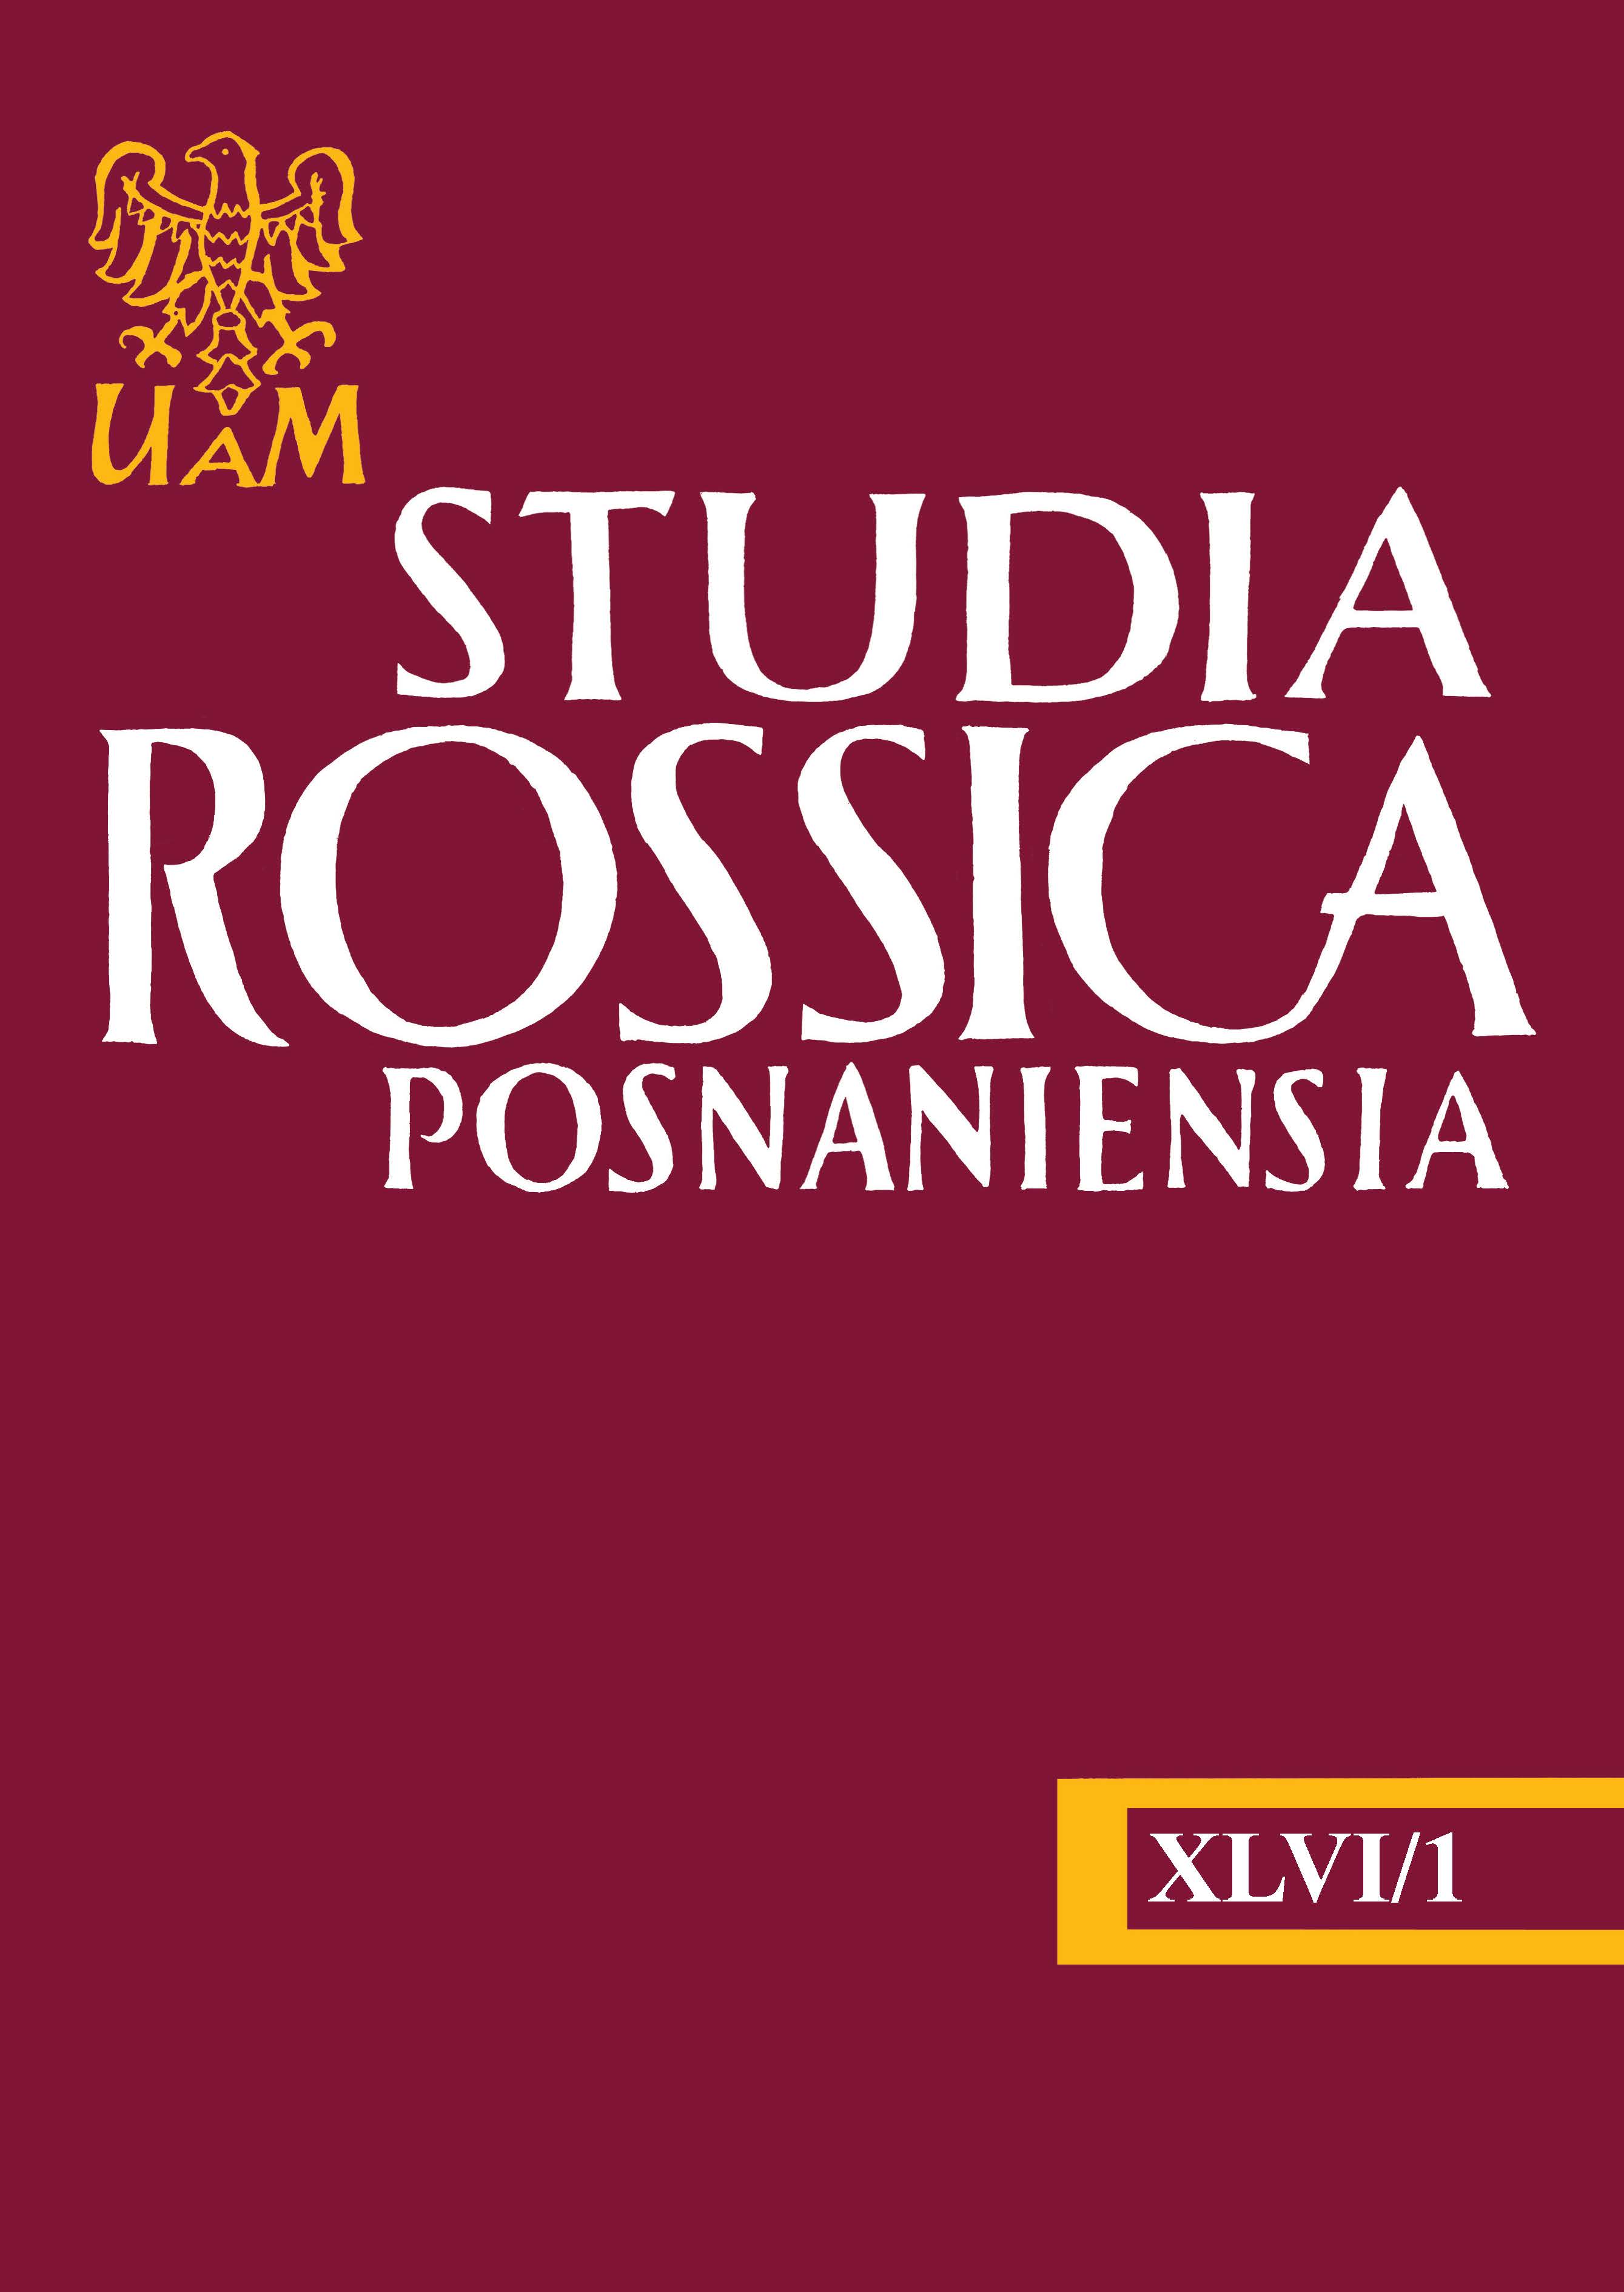 List of publications by Professor Andrzej Sitarski Cover Image